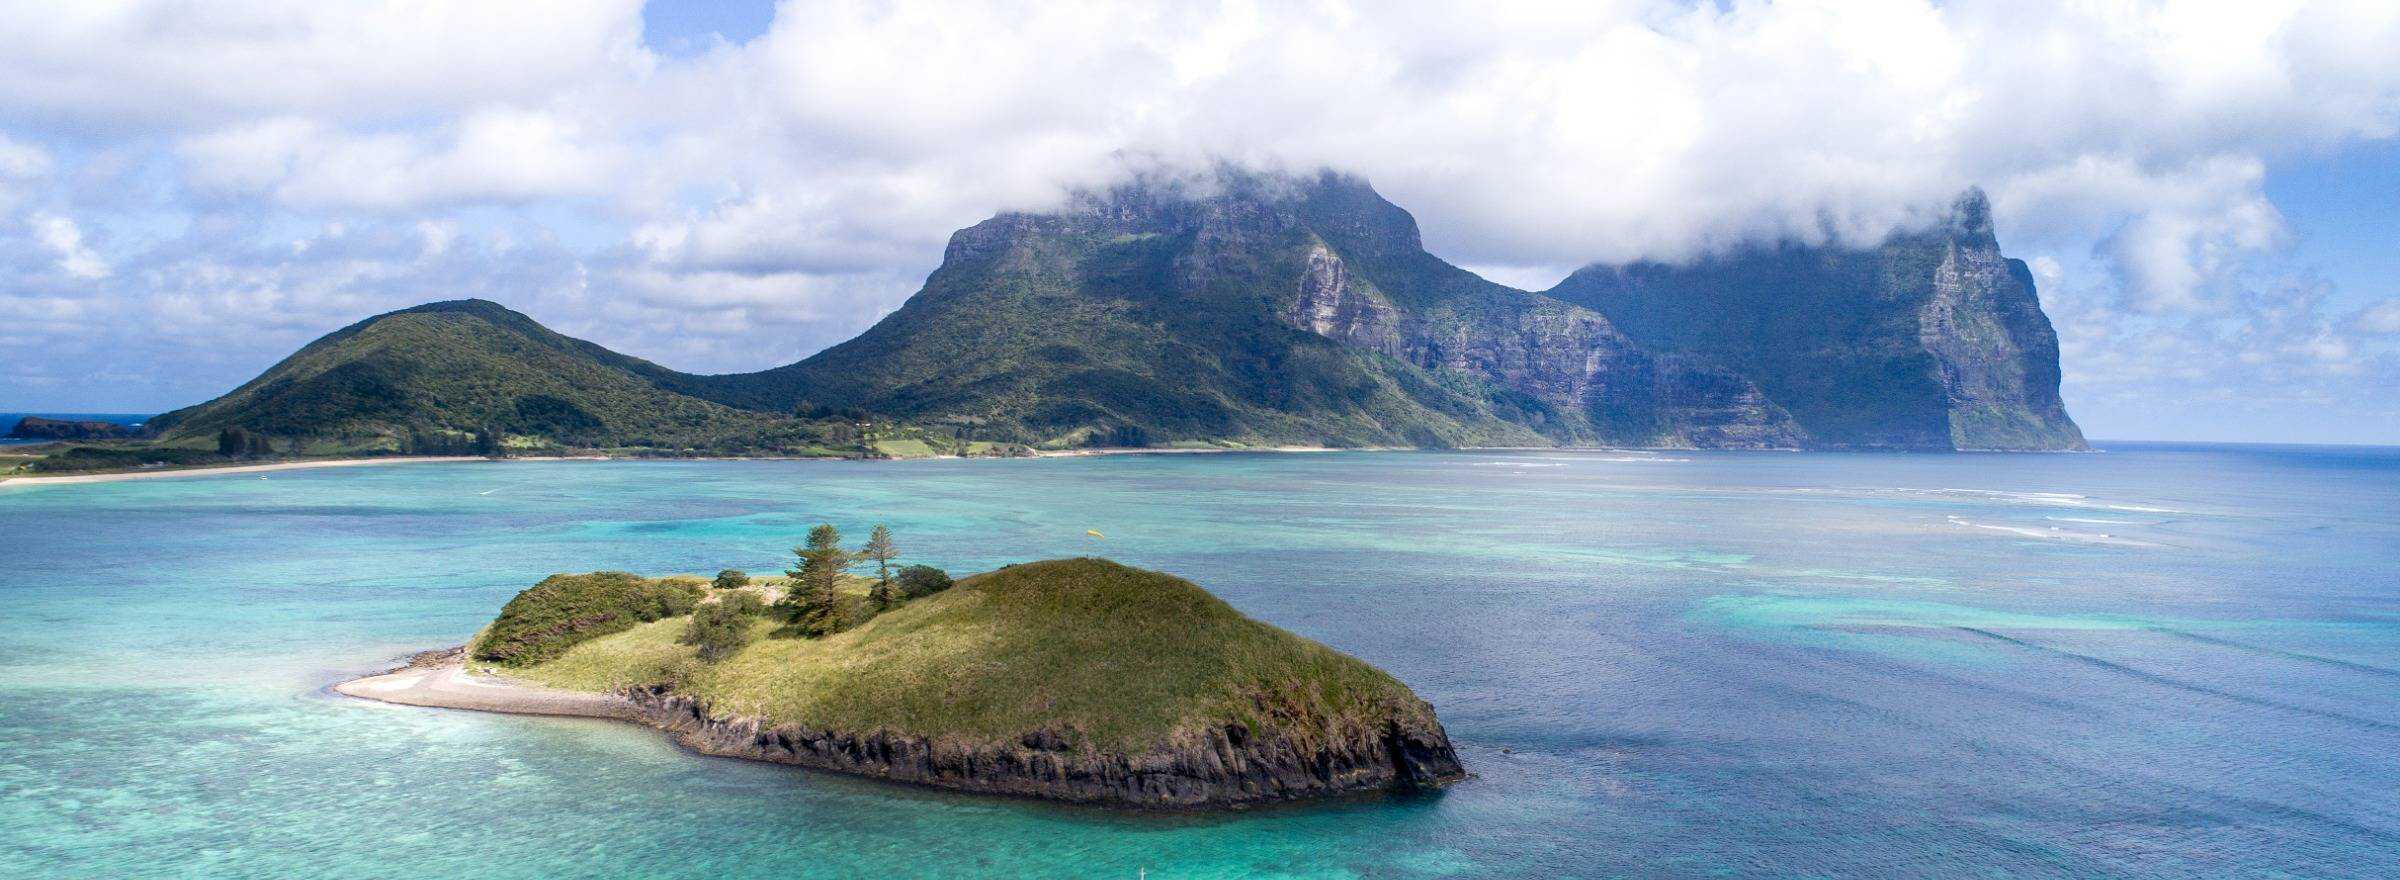 Lord Howe Island mountains